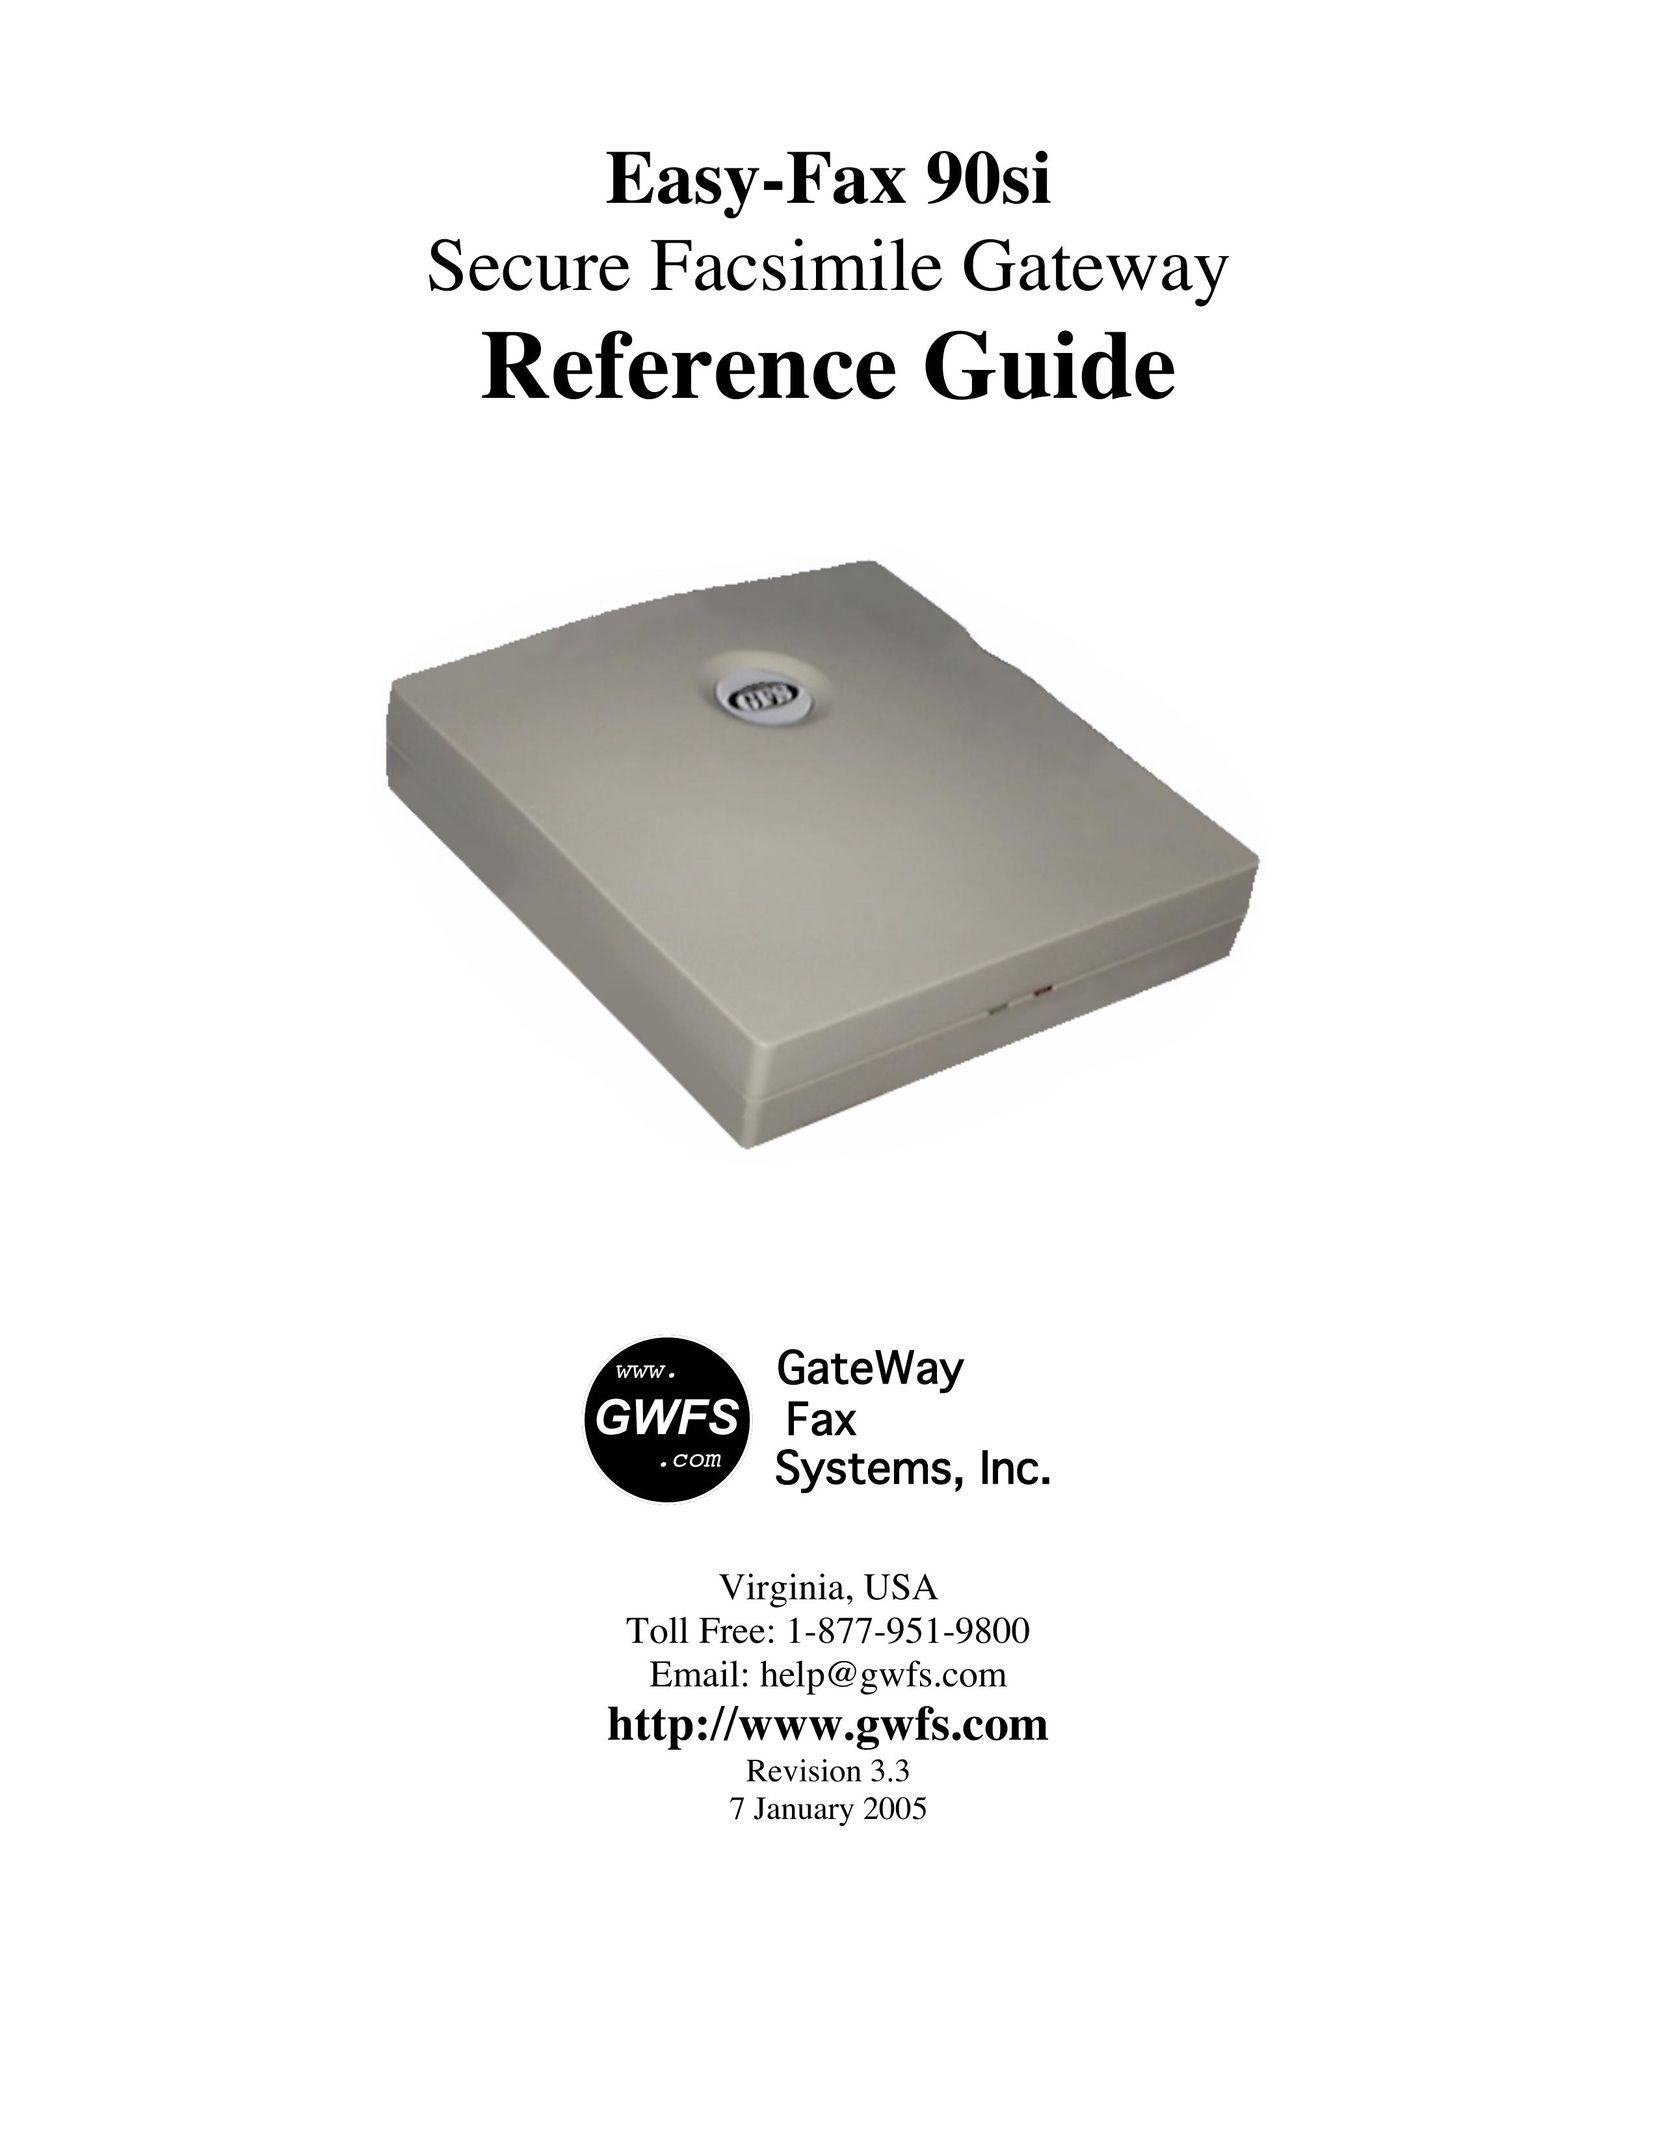 GateWay Fax Systems Easy-Fax 90si Fax Machine User Manual